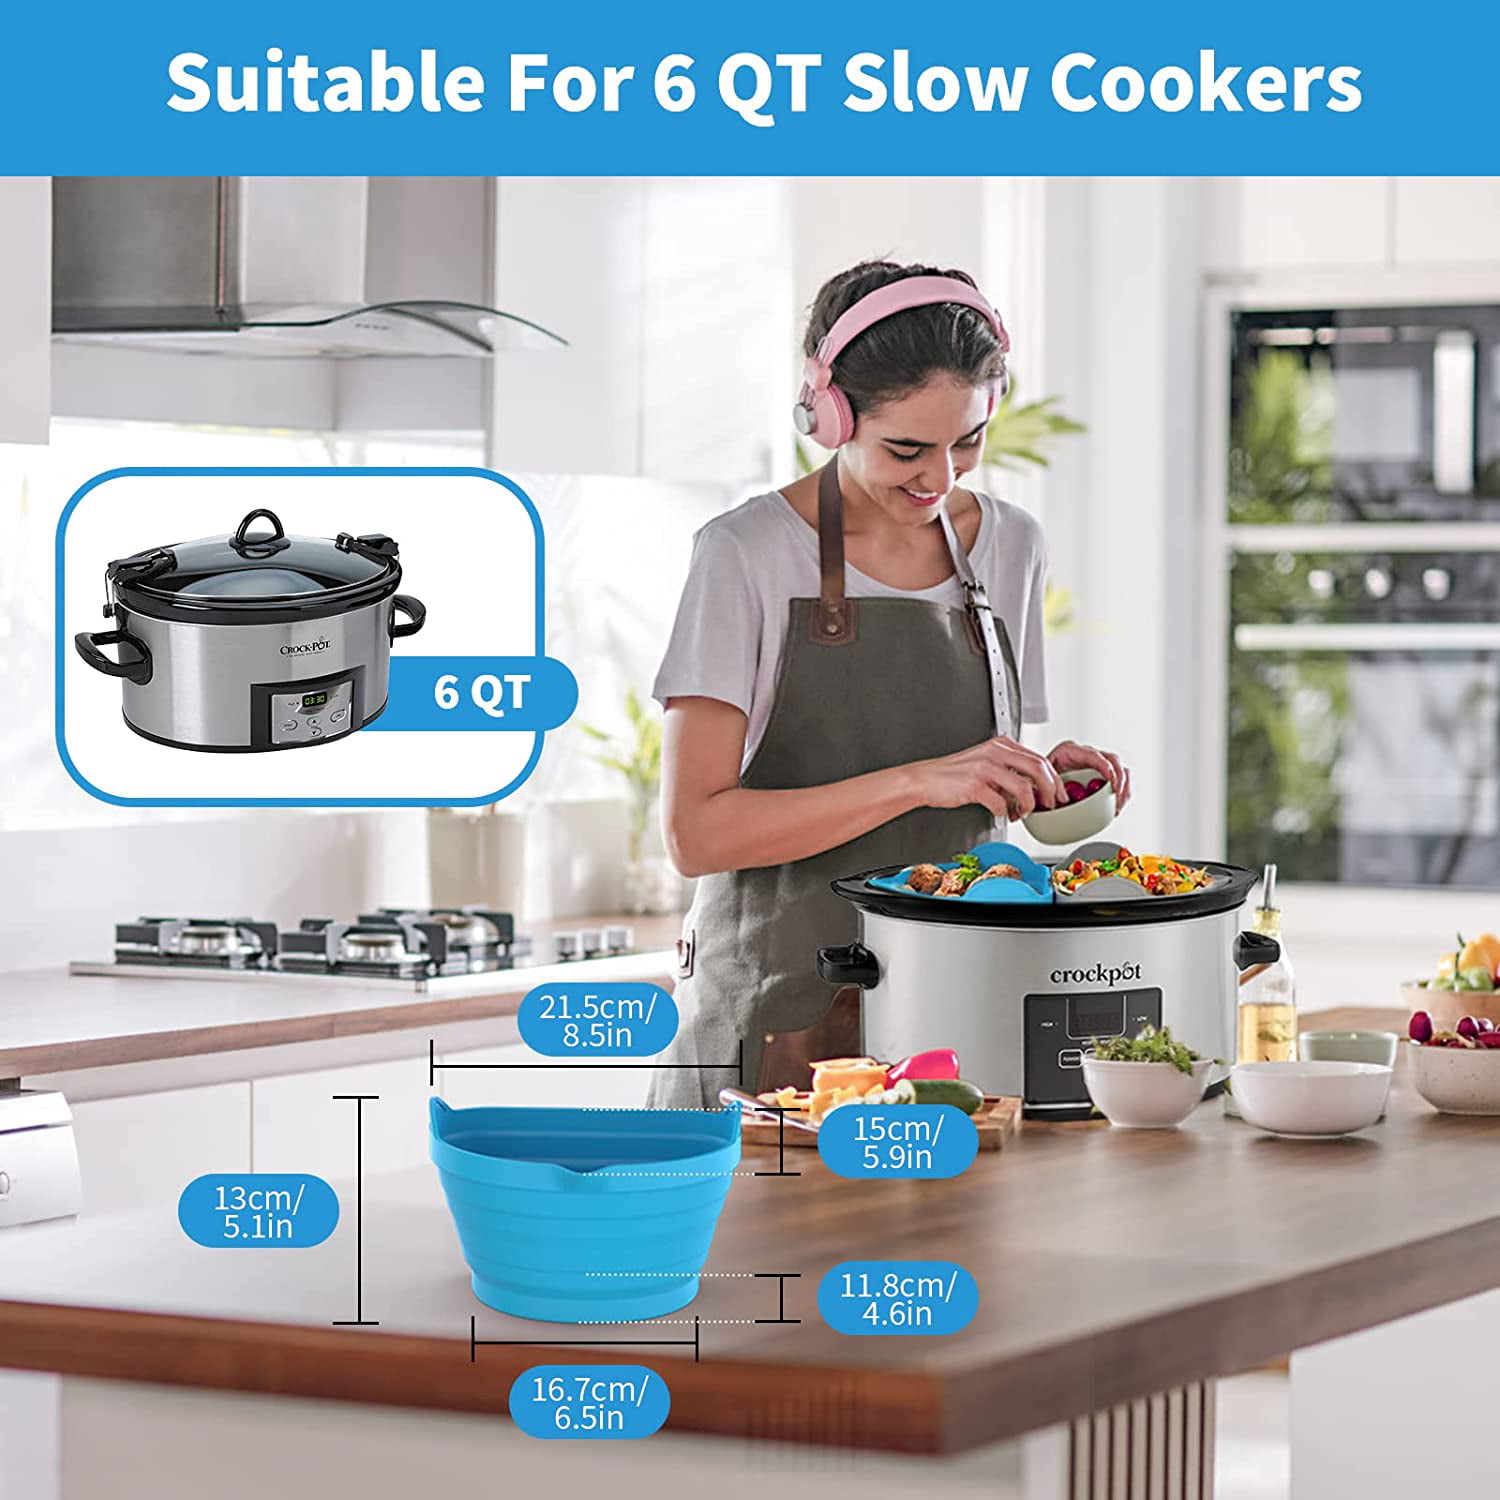 JSMKJ Slow Cooker Liners, Slow Cooker Silicone Liners, for 6 qt Crockpot, Reusable Crock Pot Liners, Easy Clean & Dishwasher Safe C